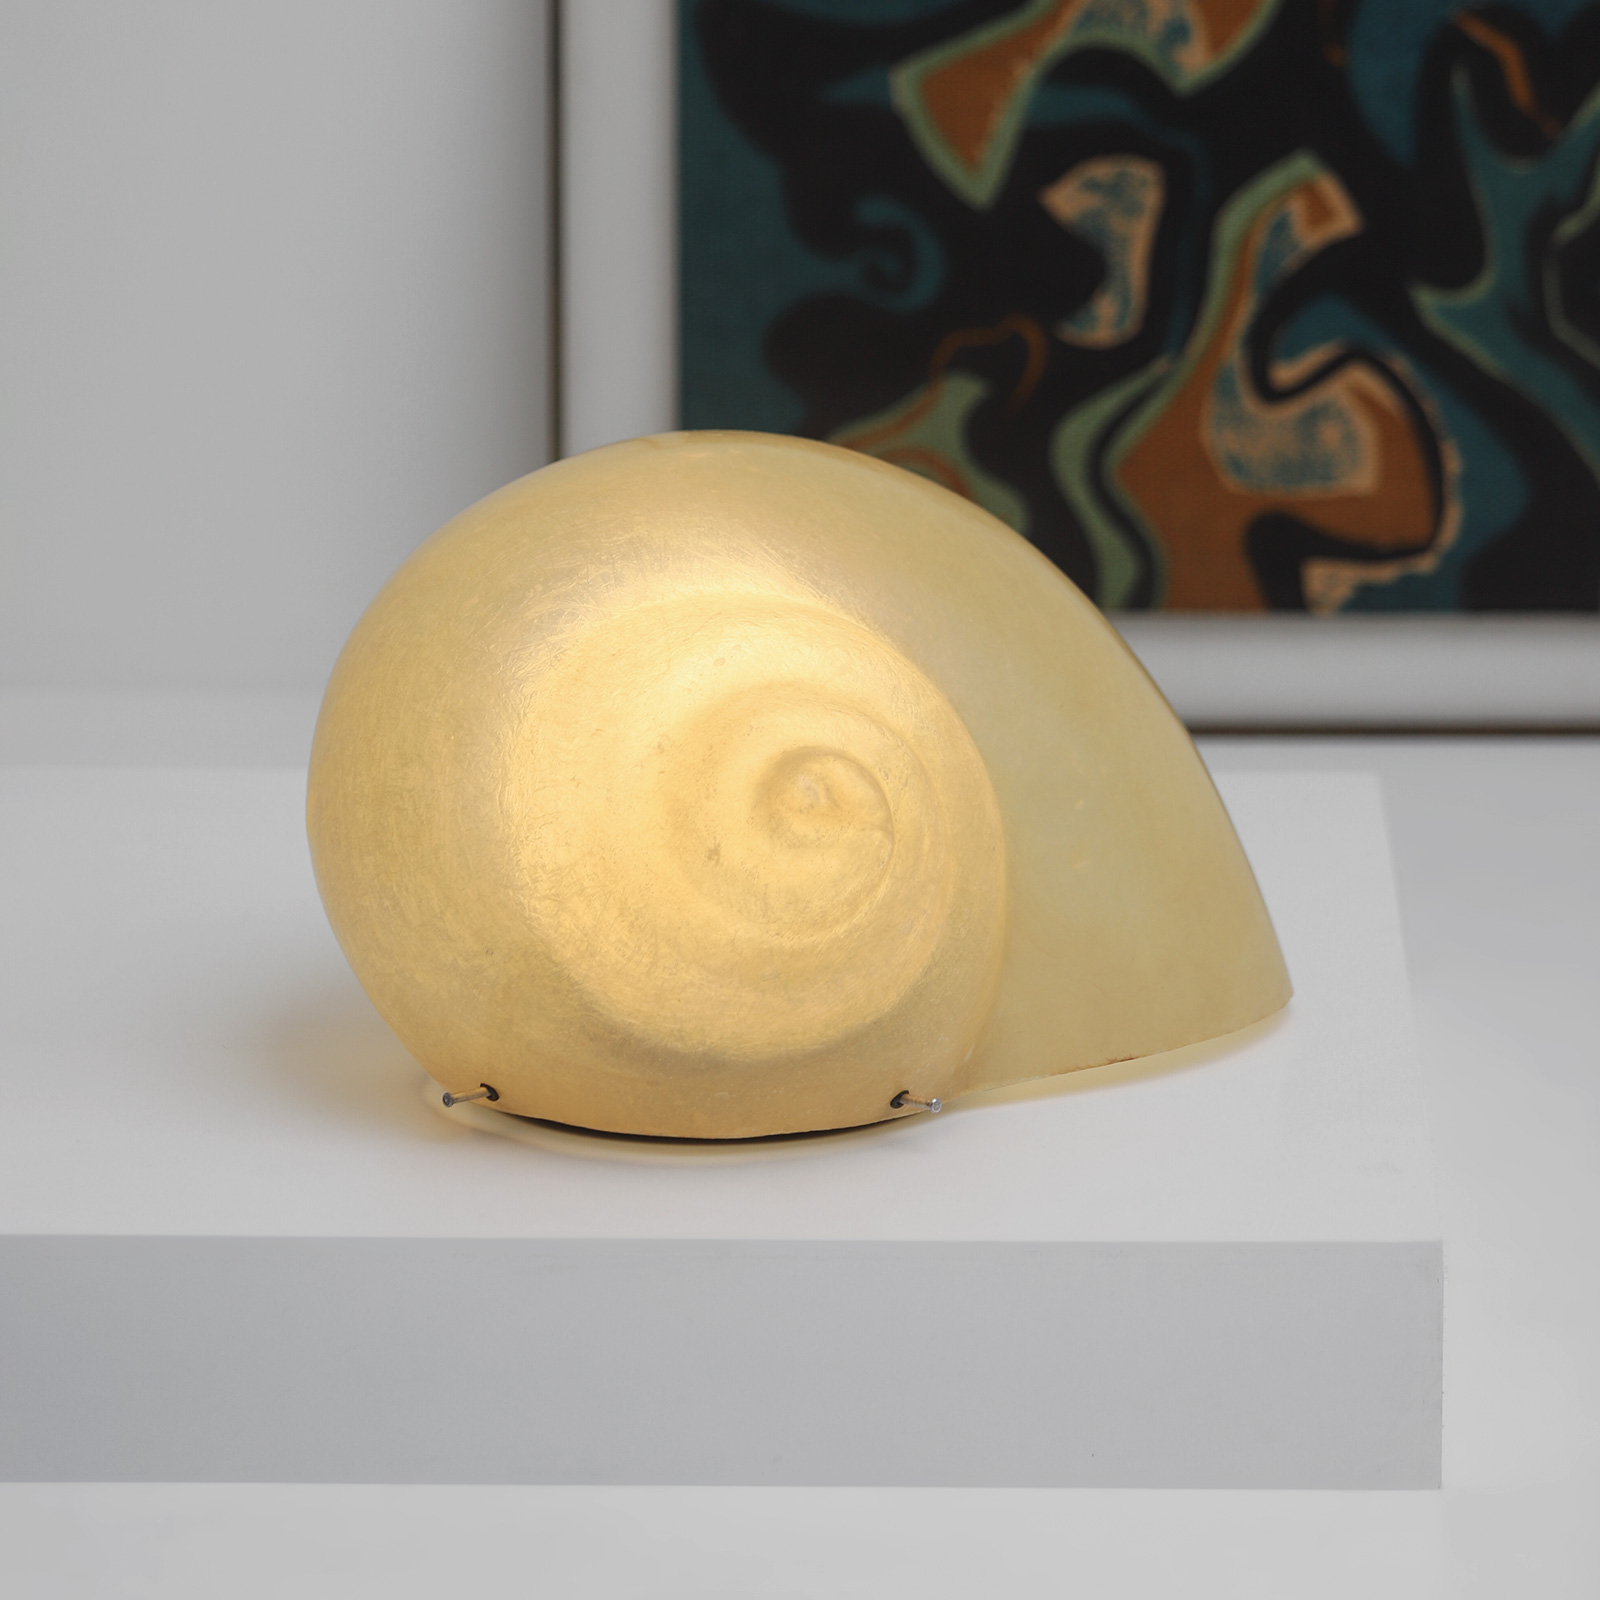 Sergio Camilli Snail Lamp for Bieffeplast, Italy, 1974